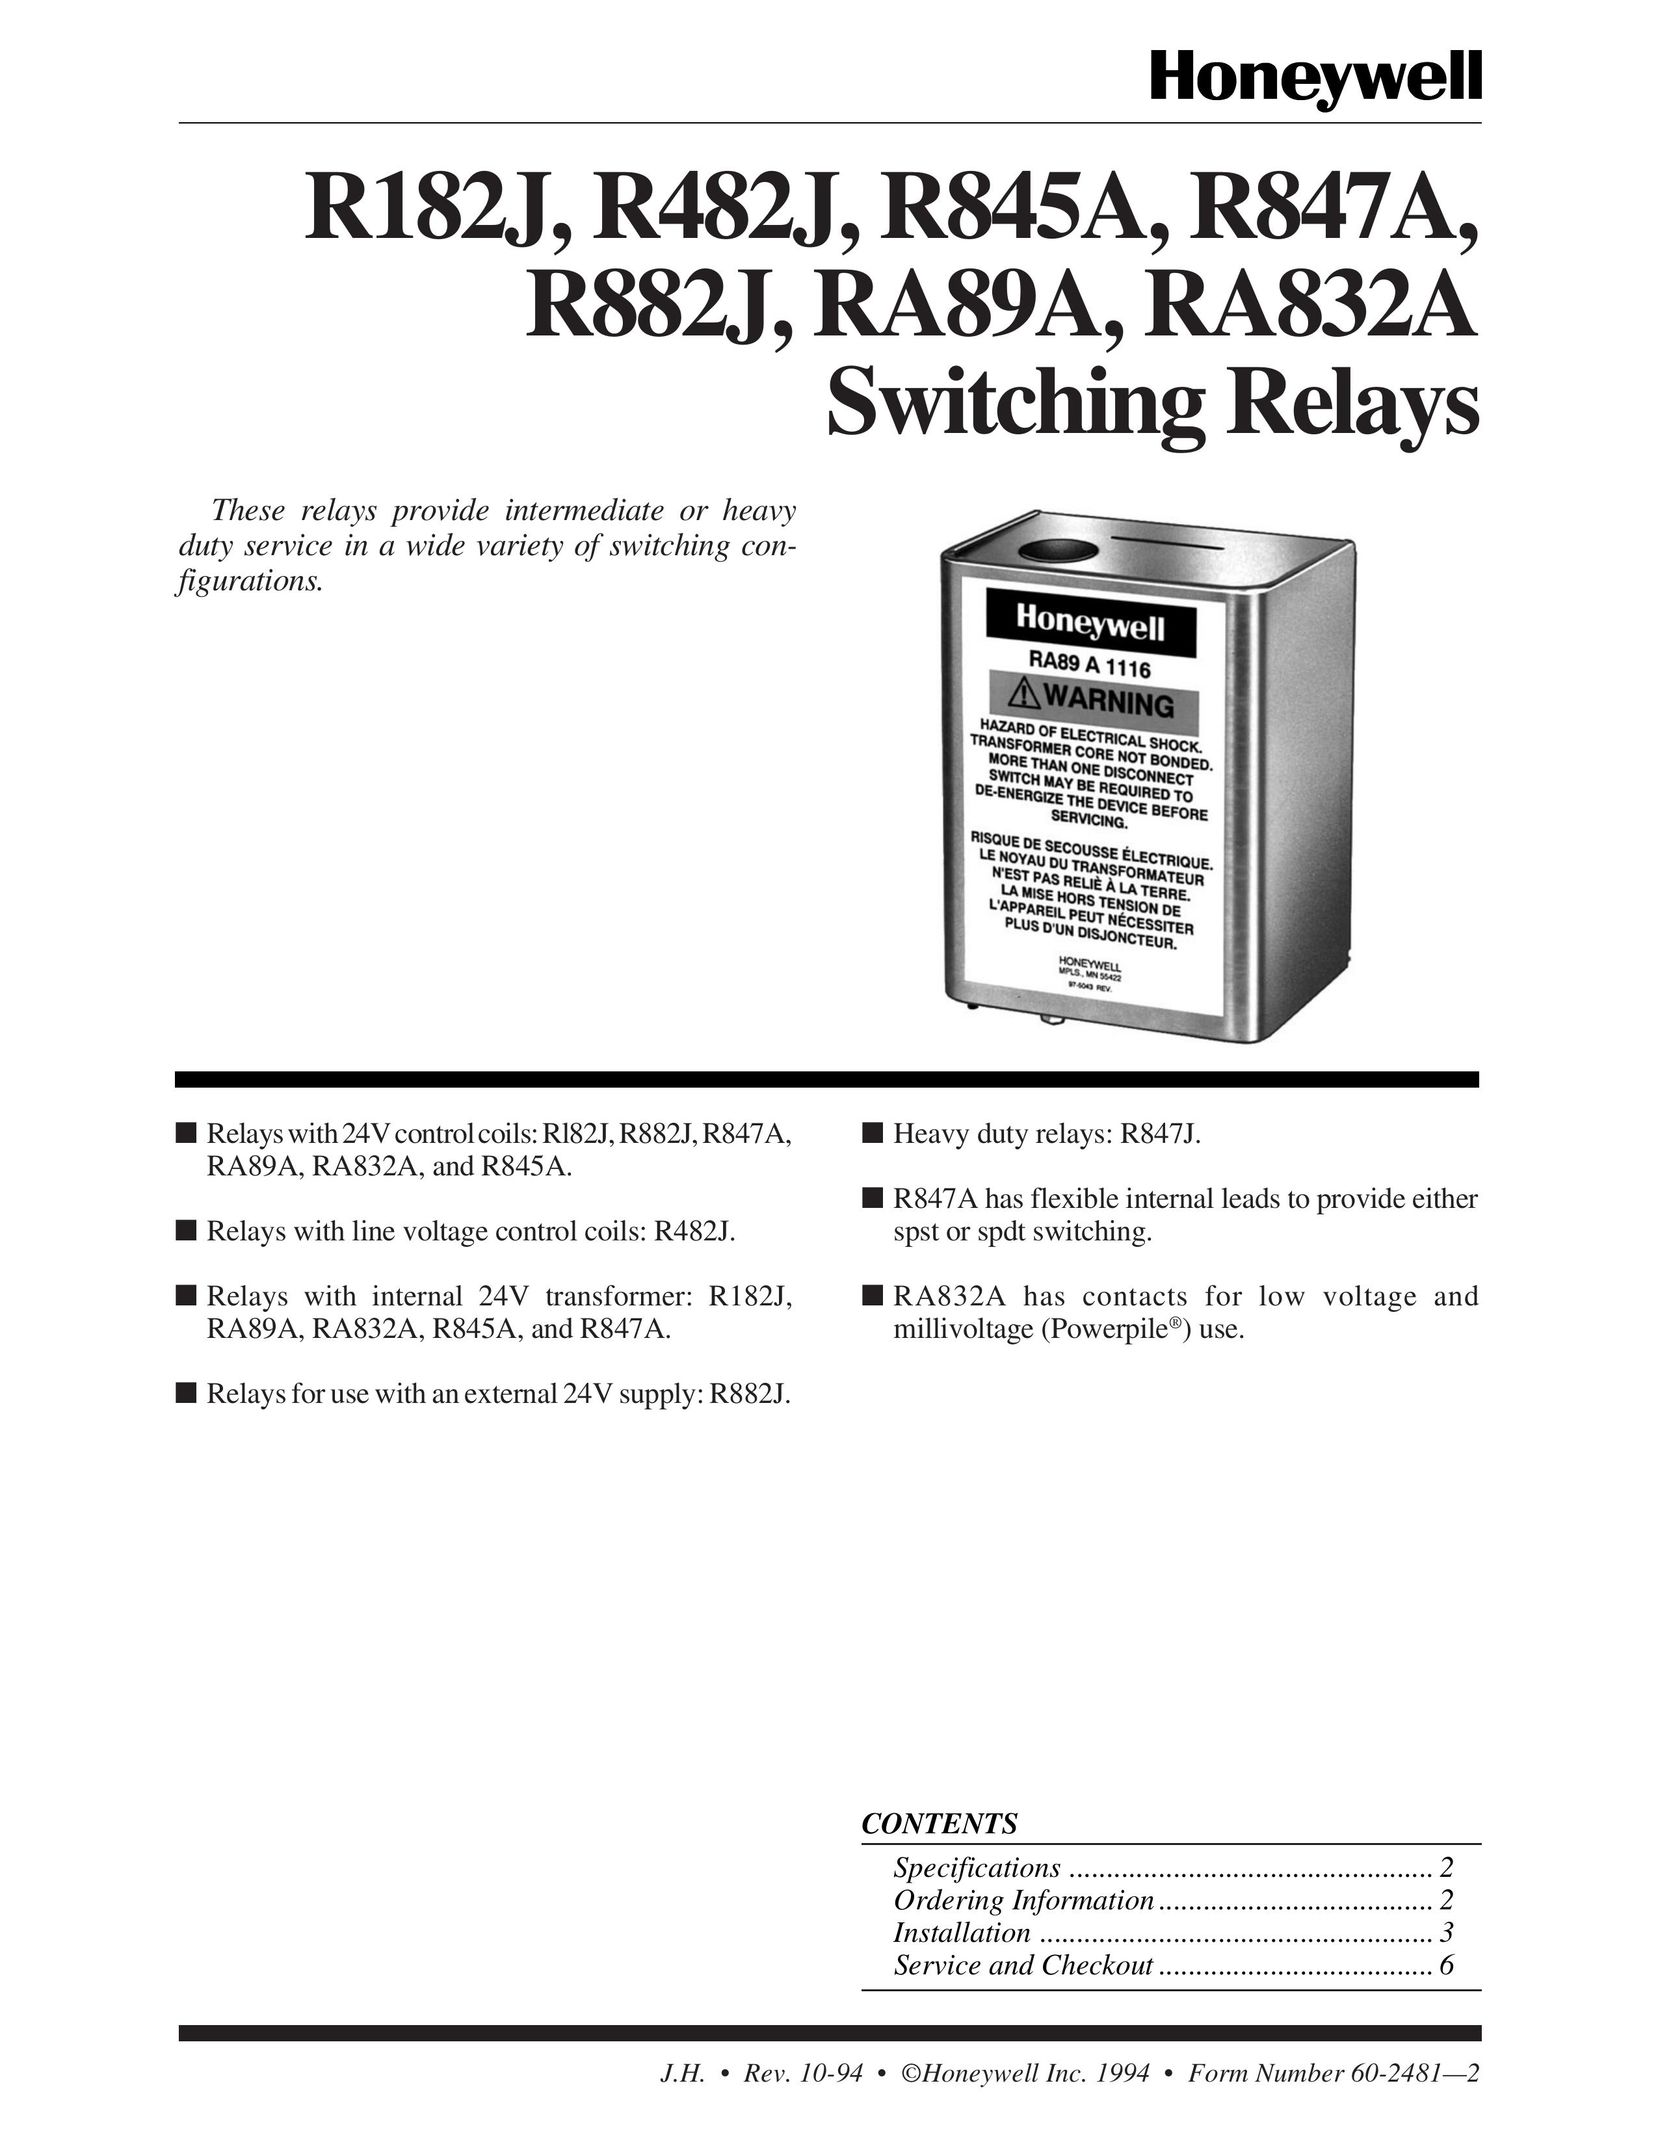 Honeywell R847A Switch User Manual